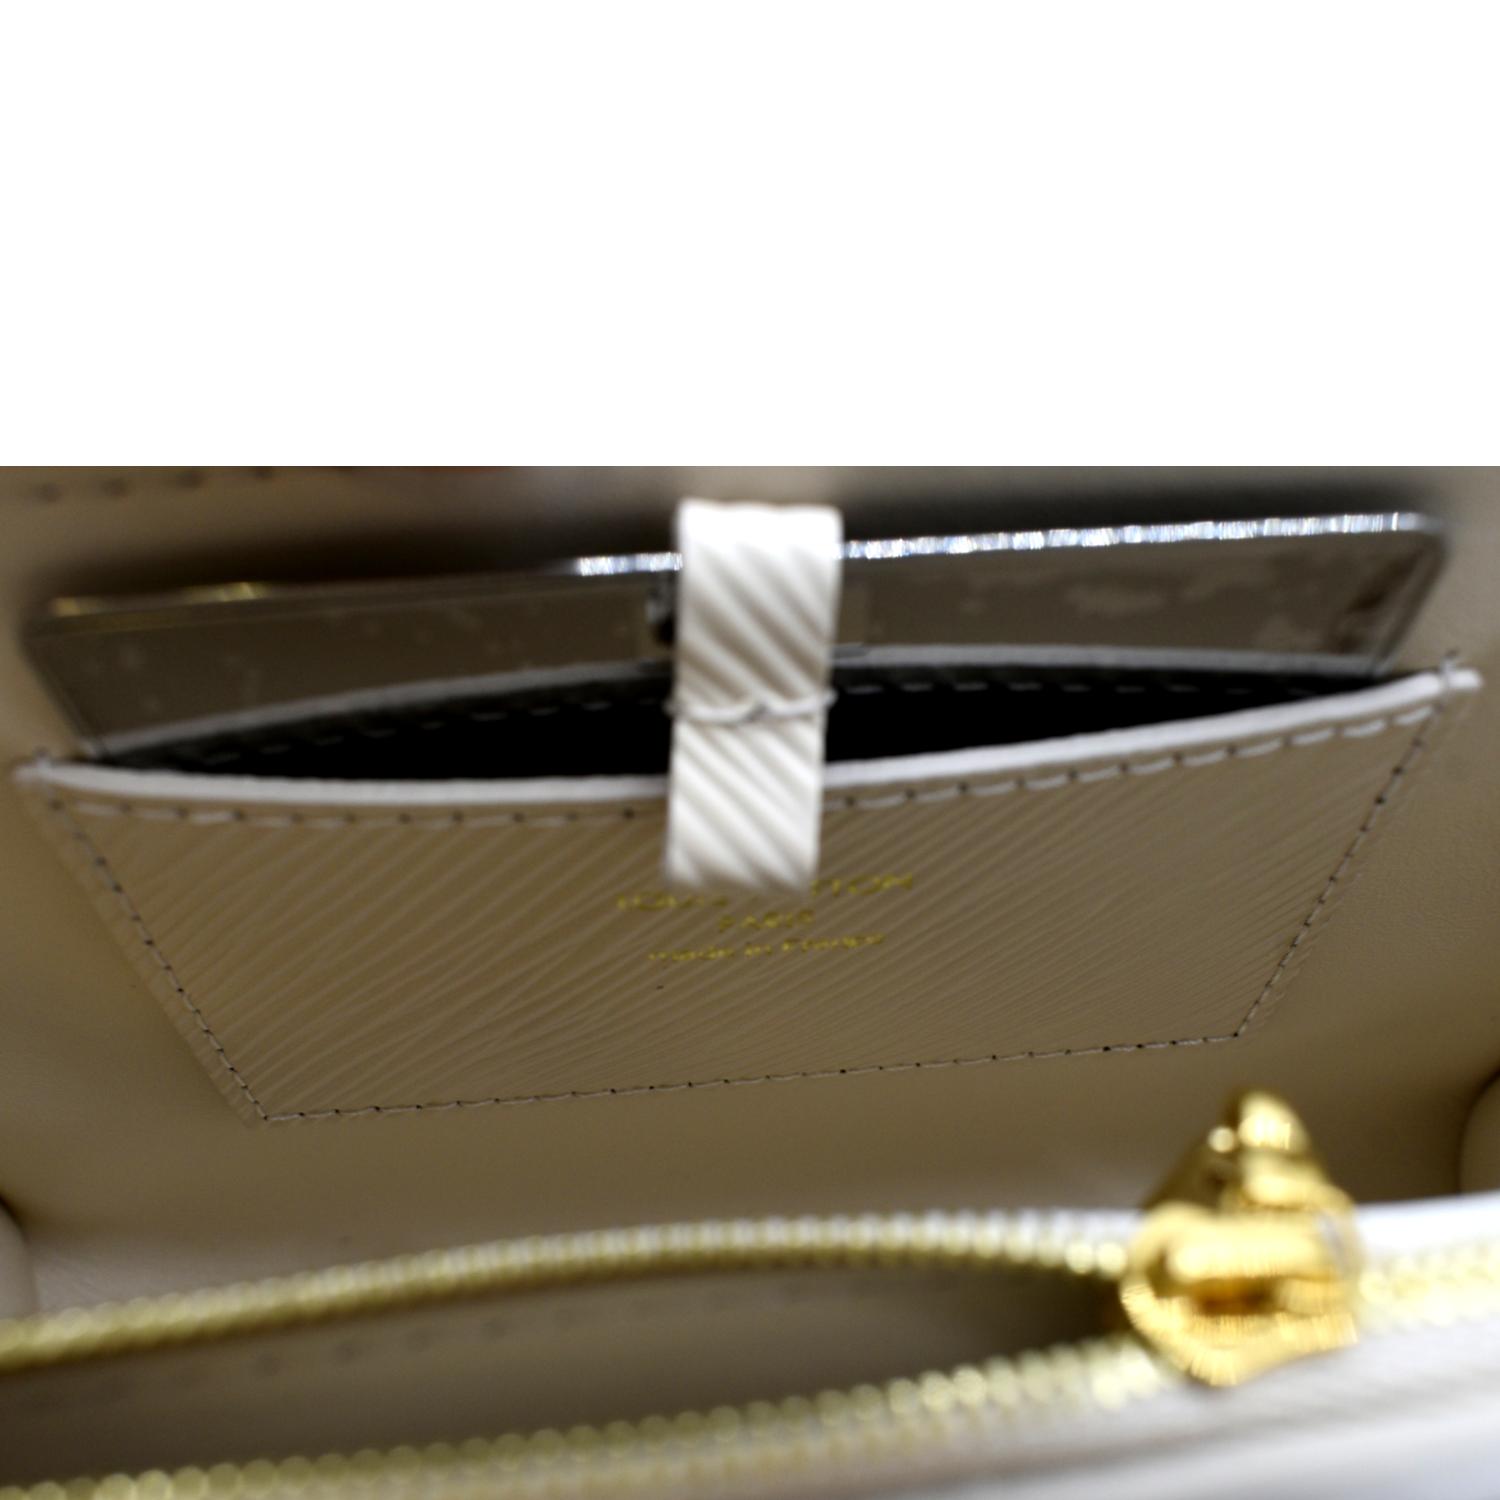 Twist PM Epi Leather - Women - Handbags